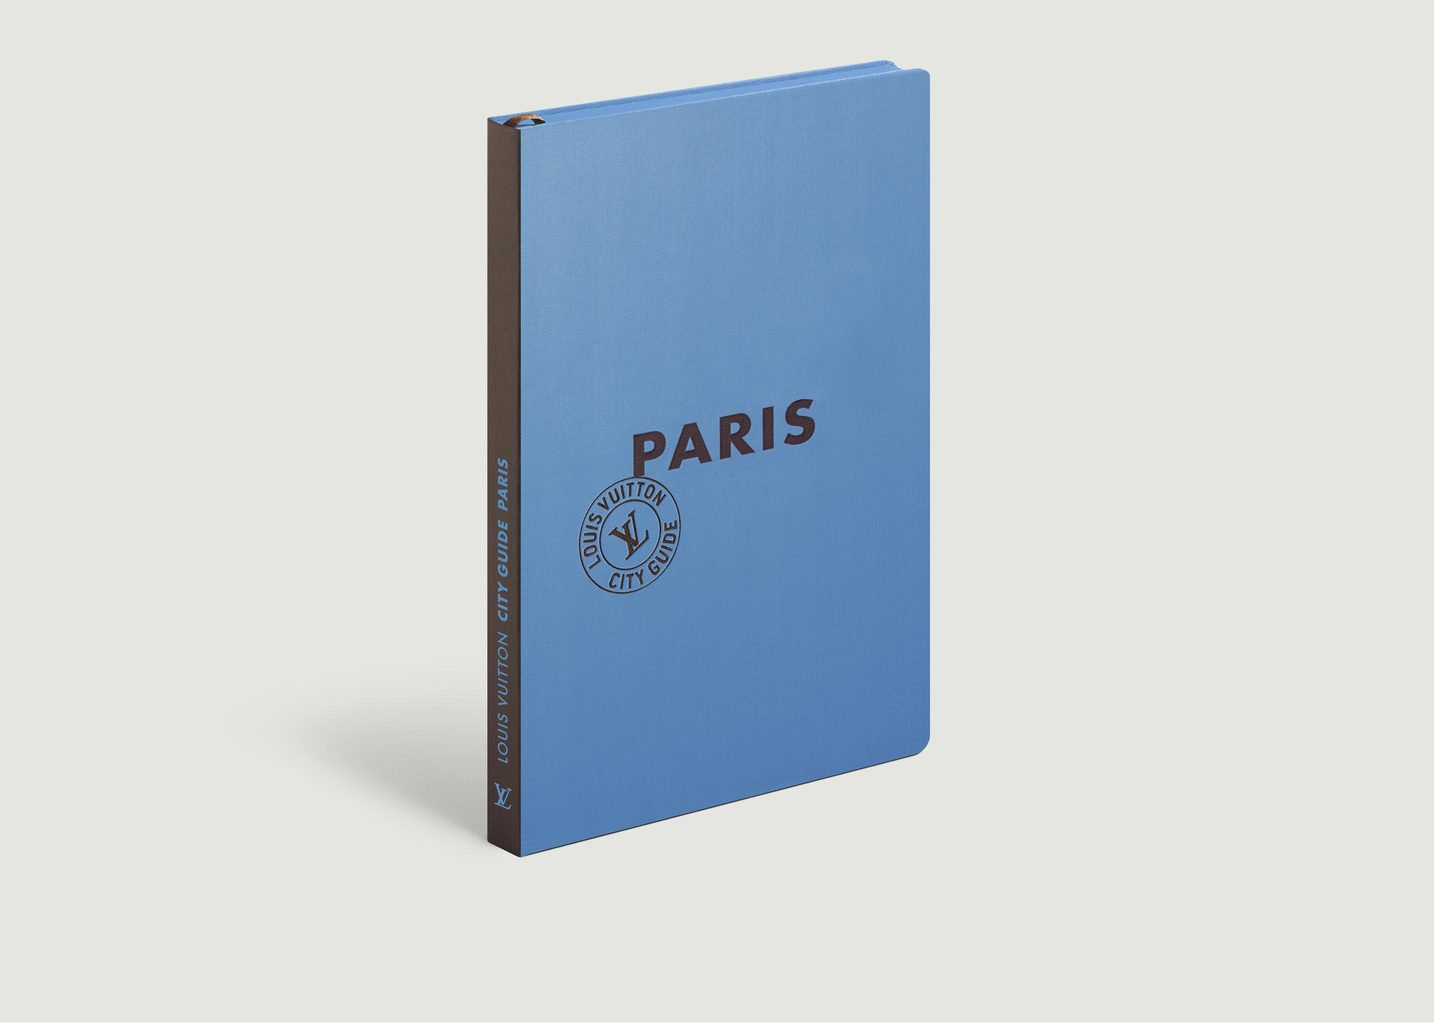 City Guide Paris 2020 (Anglais) - Louis Vuitton Travel Book